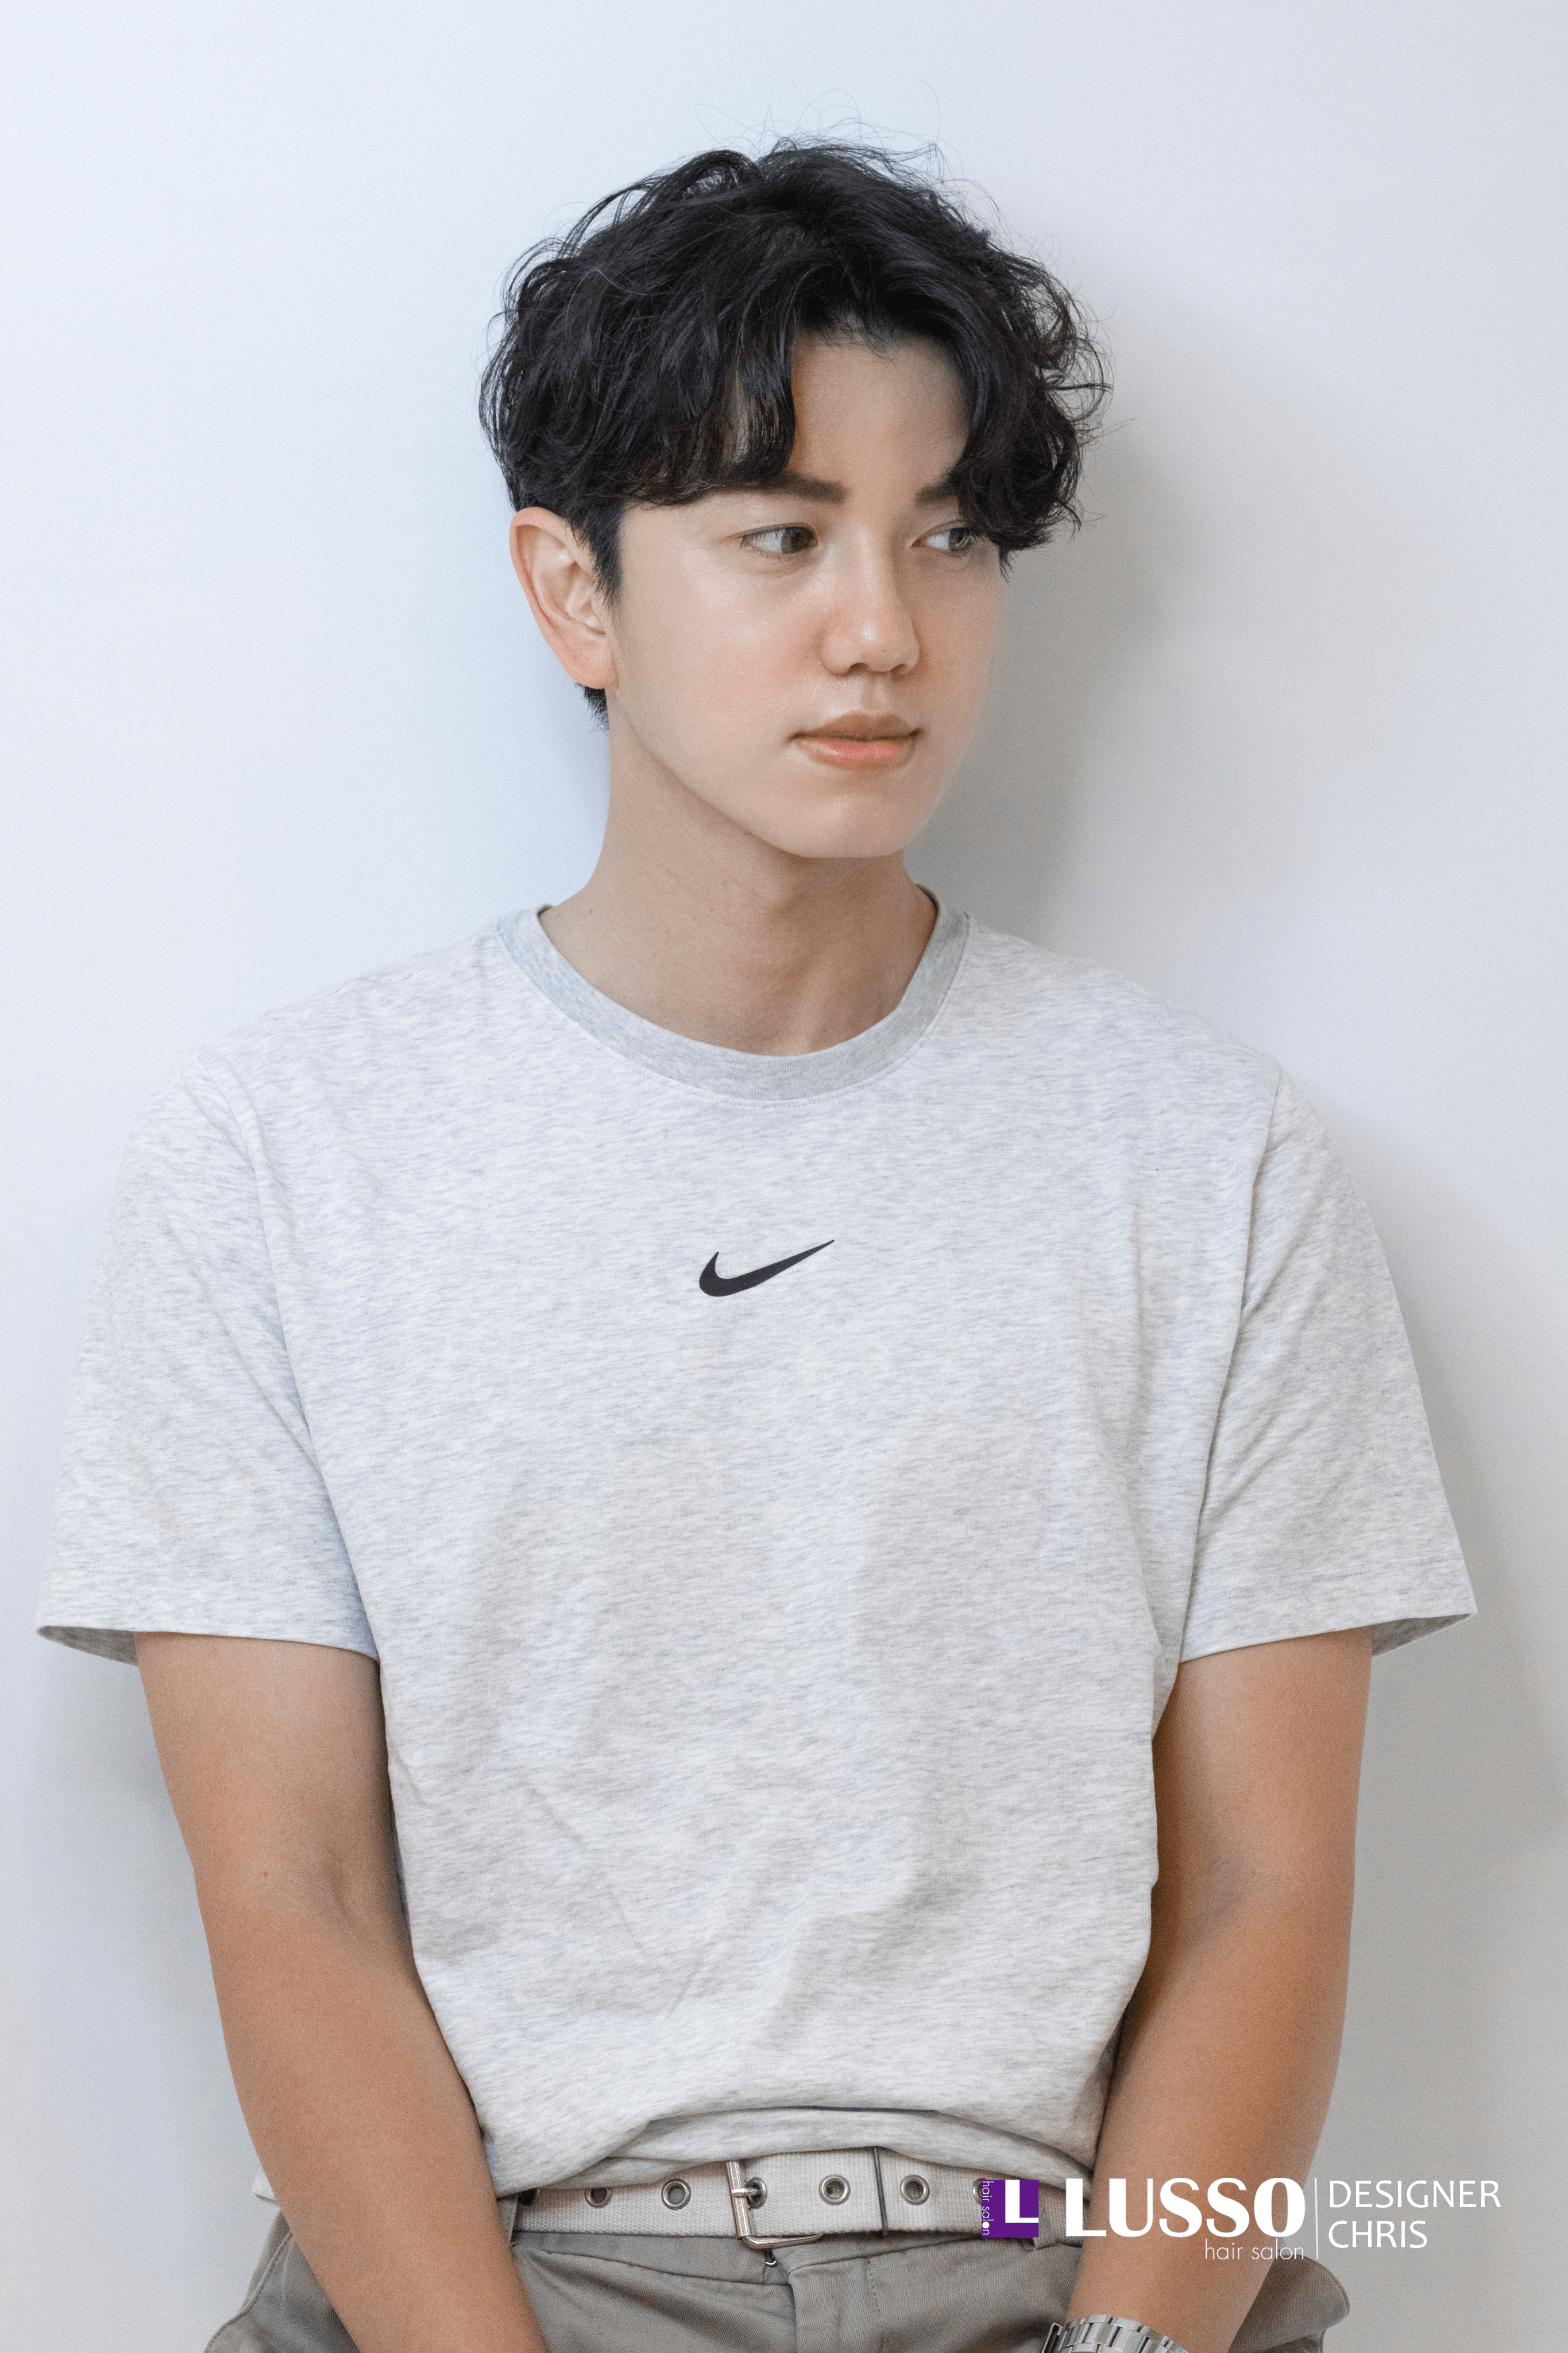 Chris-男生燙髮 韓系男生 紋理燙